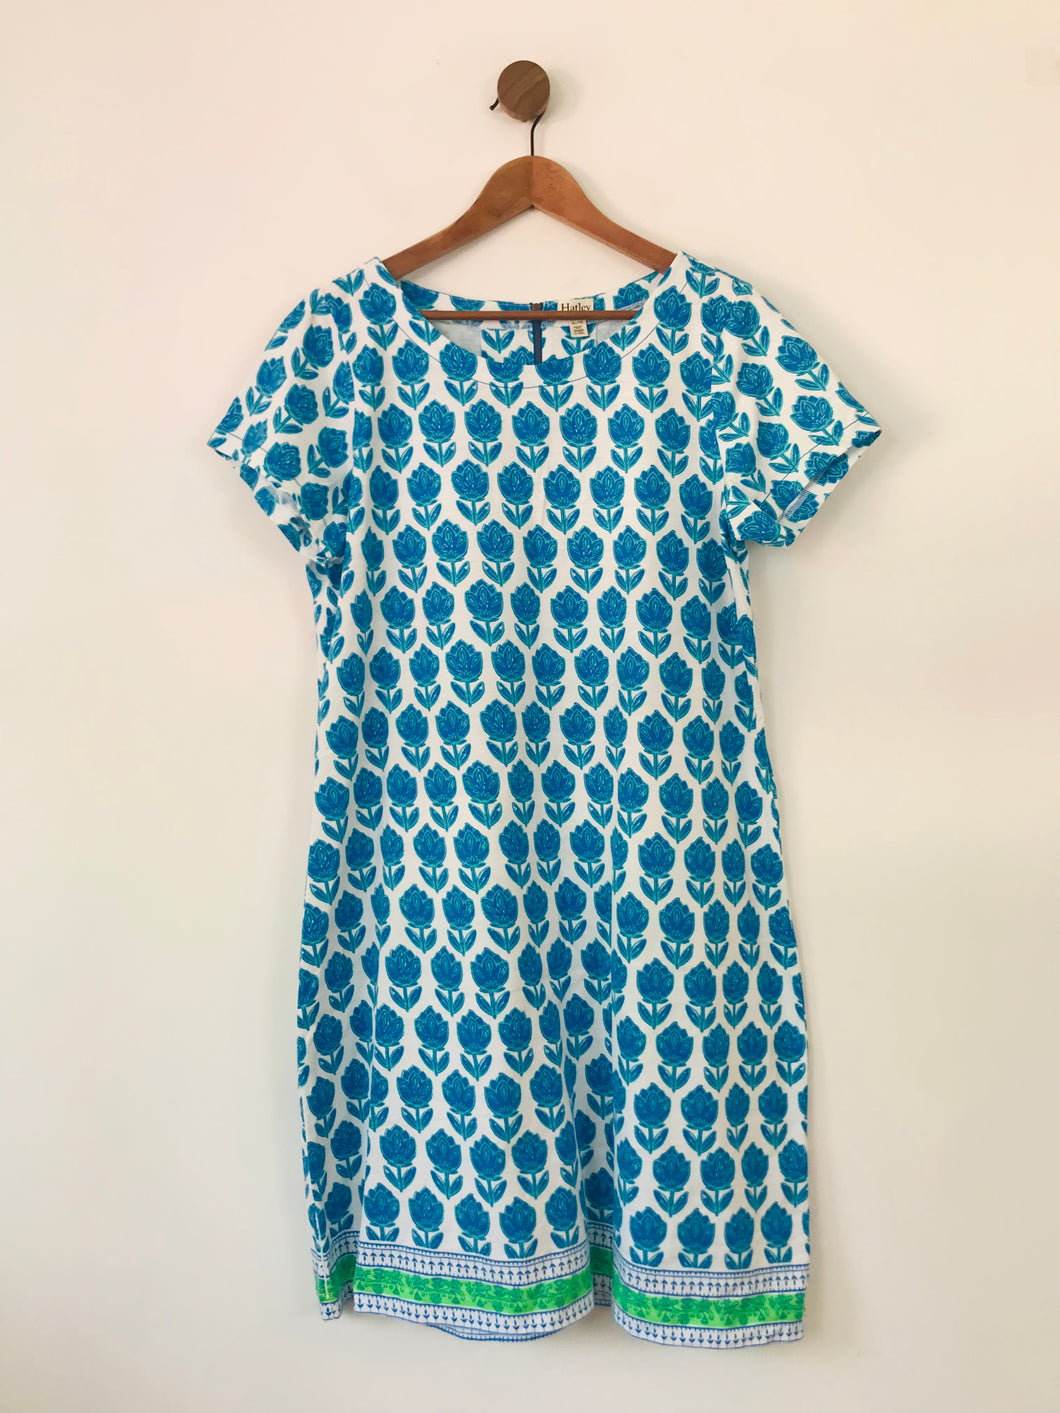 Hatley Women's Floral Shift Dress | XL UK16-18 | Blue